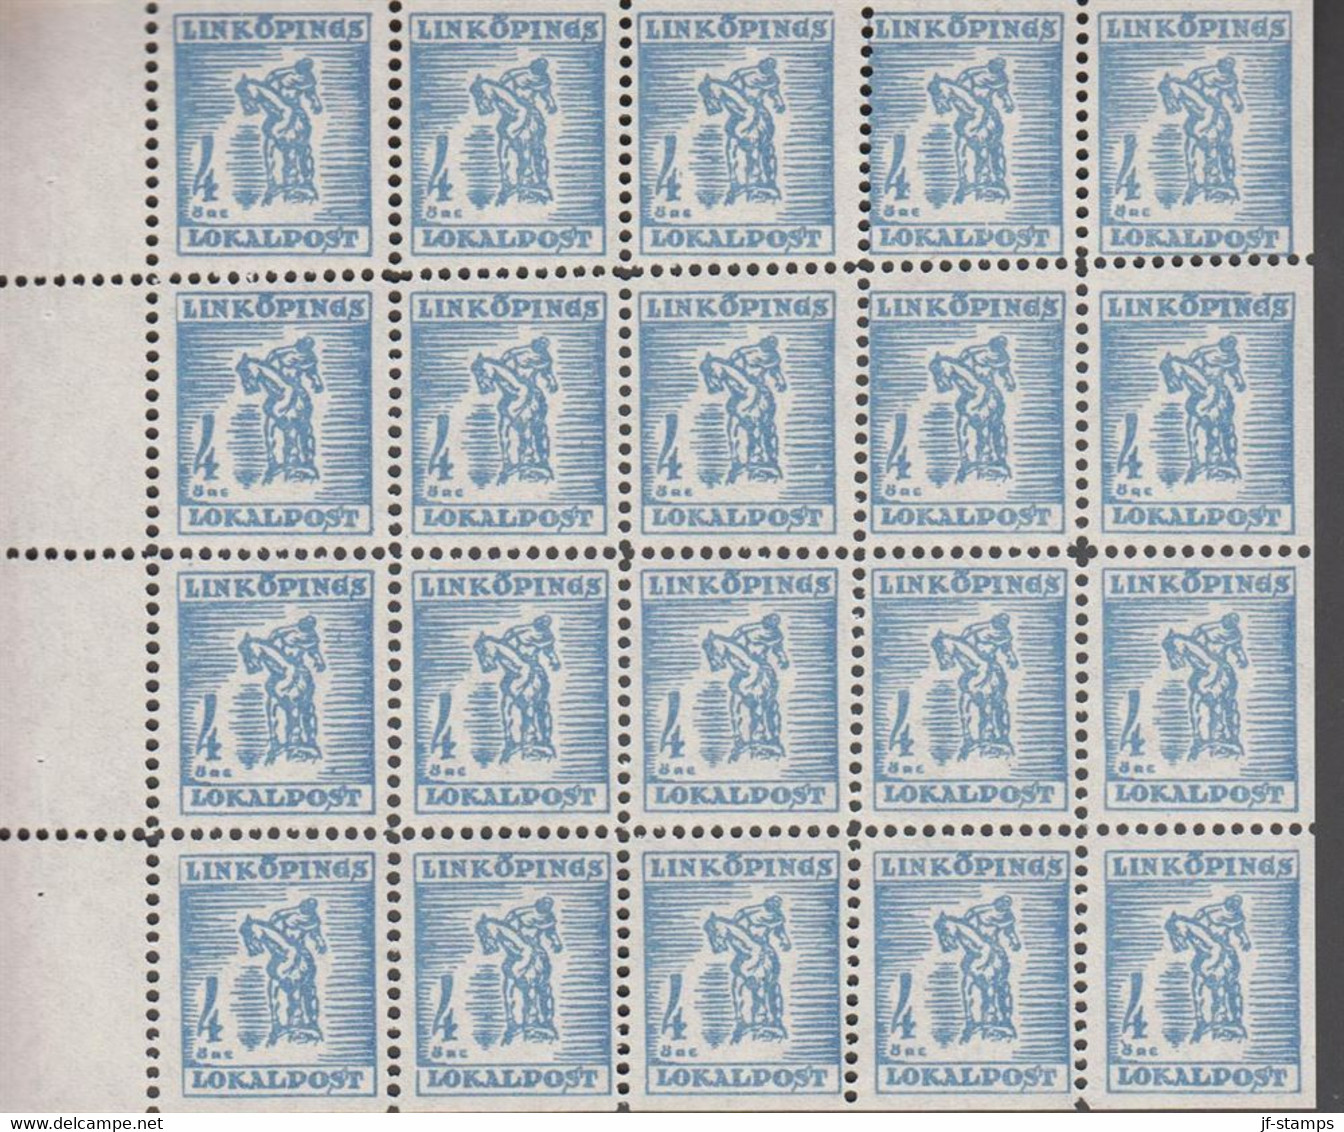 1945. SVERIGE.  LINKÖPINGS LOKALPOST 4 ÖRE In Complete Sheet With 20 Stamps. Never Hinged. Unusual Sheet.  - JF520108 - Emisiones Locales